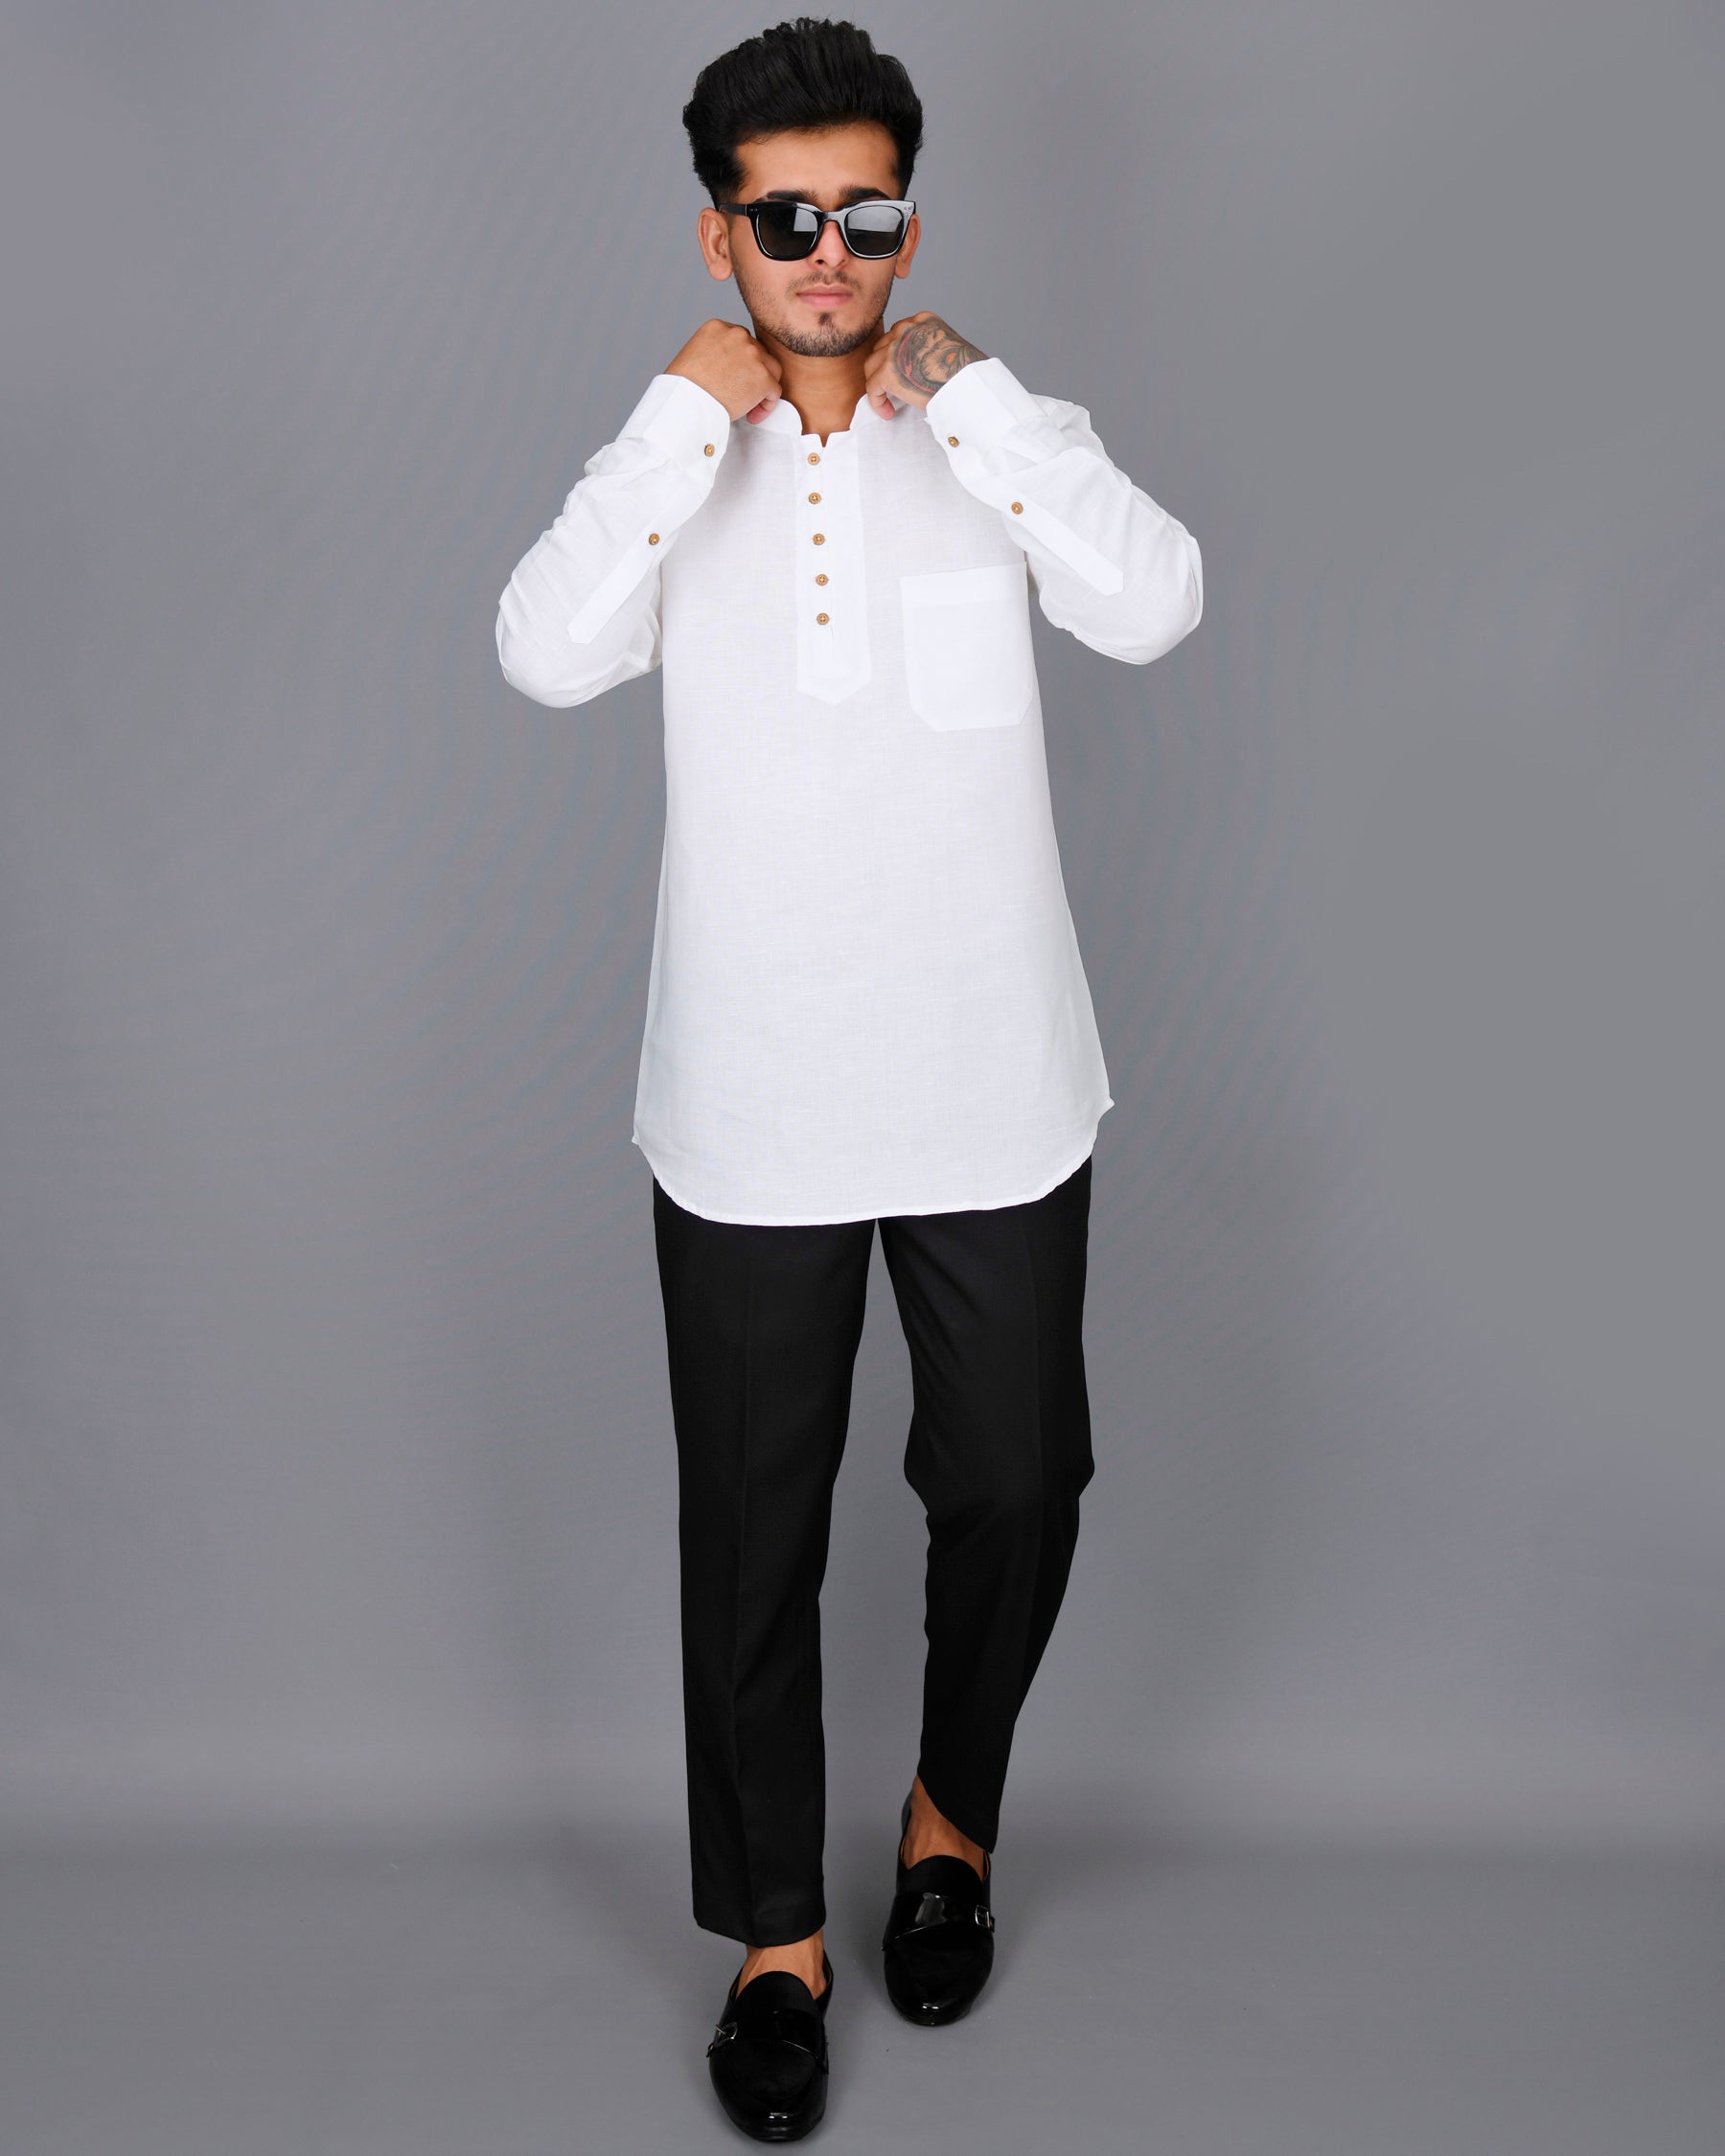 Bright white Indian Kurta Style Luxurious Linen Shirt 2671KS-38, 2671KS-H-38, 2671KS-39, 2671KS-H-39, 2671KS-40, 2671KS-H-40, 2671KS-42, 2671KS-H-42, 2671KS-44, 2671KS-H-44, 2671KS-46, 2671KS-H-46, 2671KS-48, 2671KS-H-48, 2671KS-50, 2671KS-H-50, 2671KS-52, 2671KS-H-52